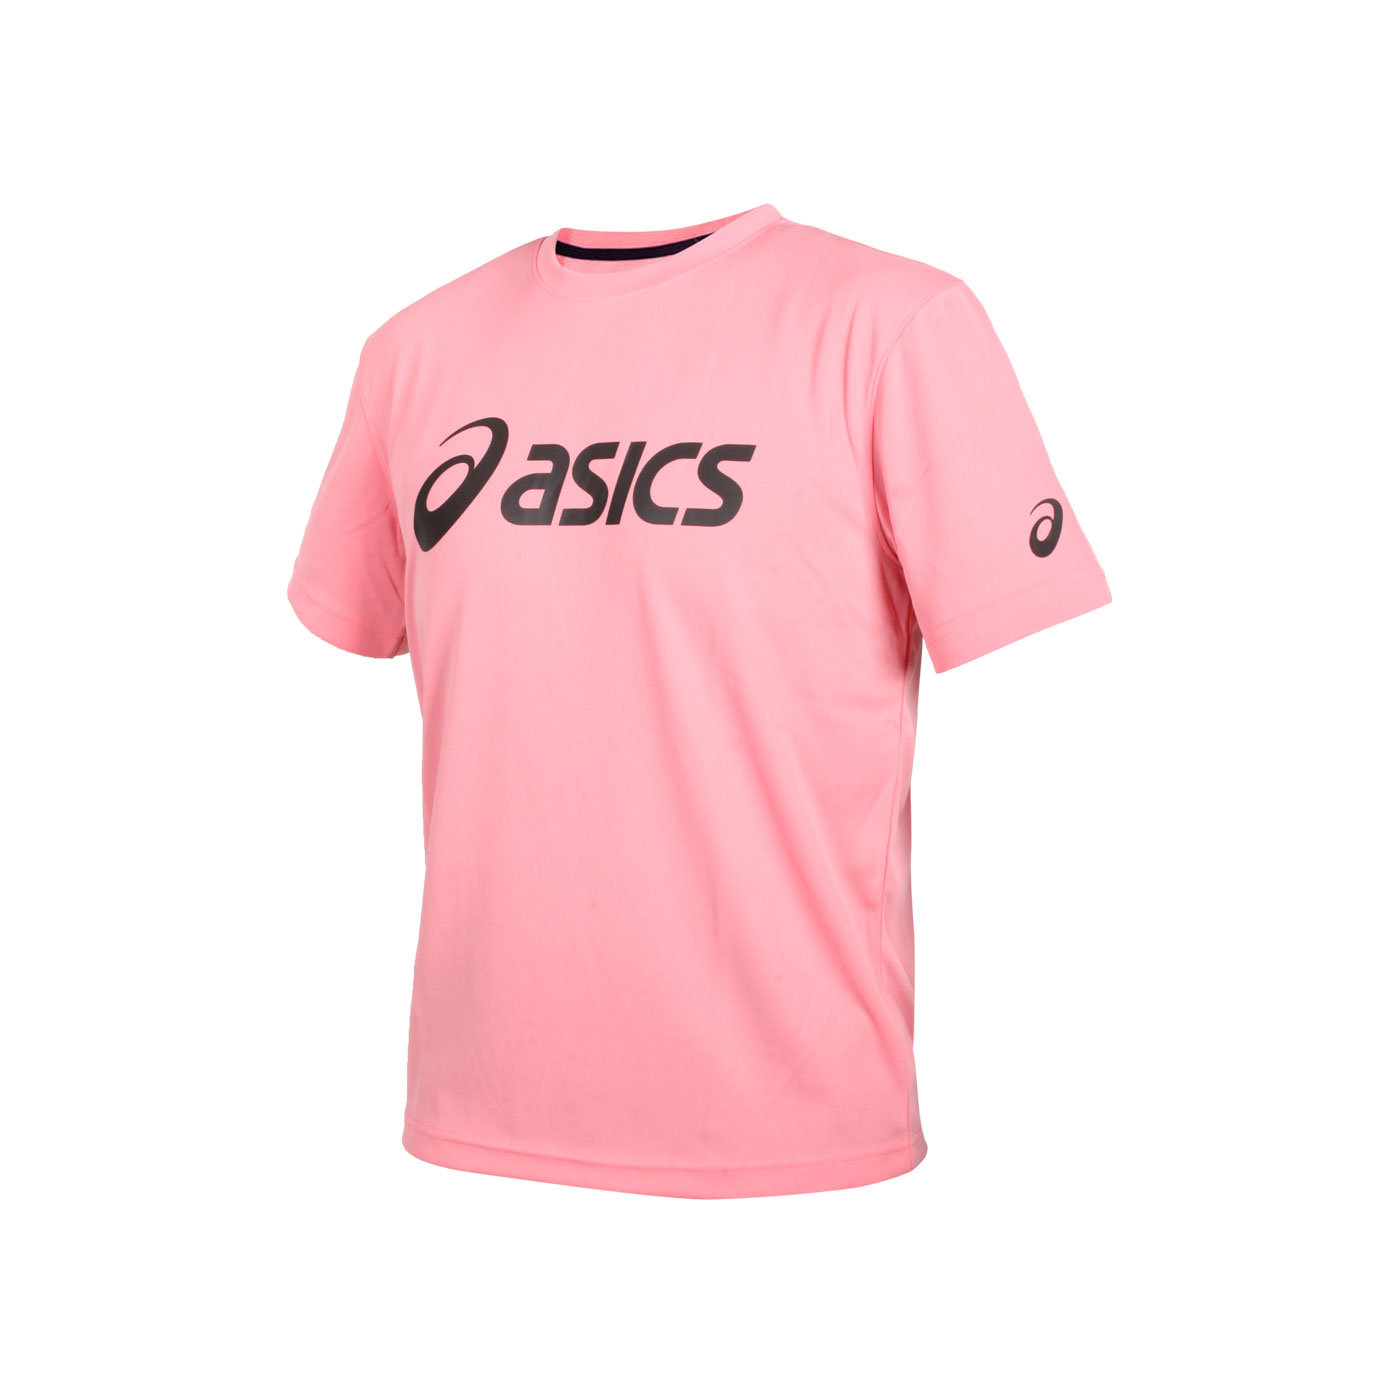 ASICS 運動排汗T恤 K31415-15 - 粉紅黑